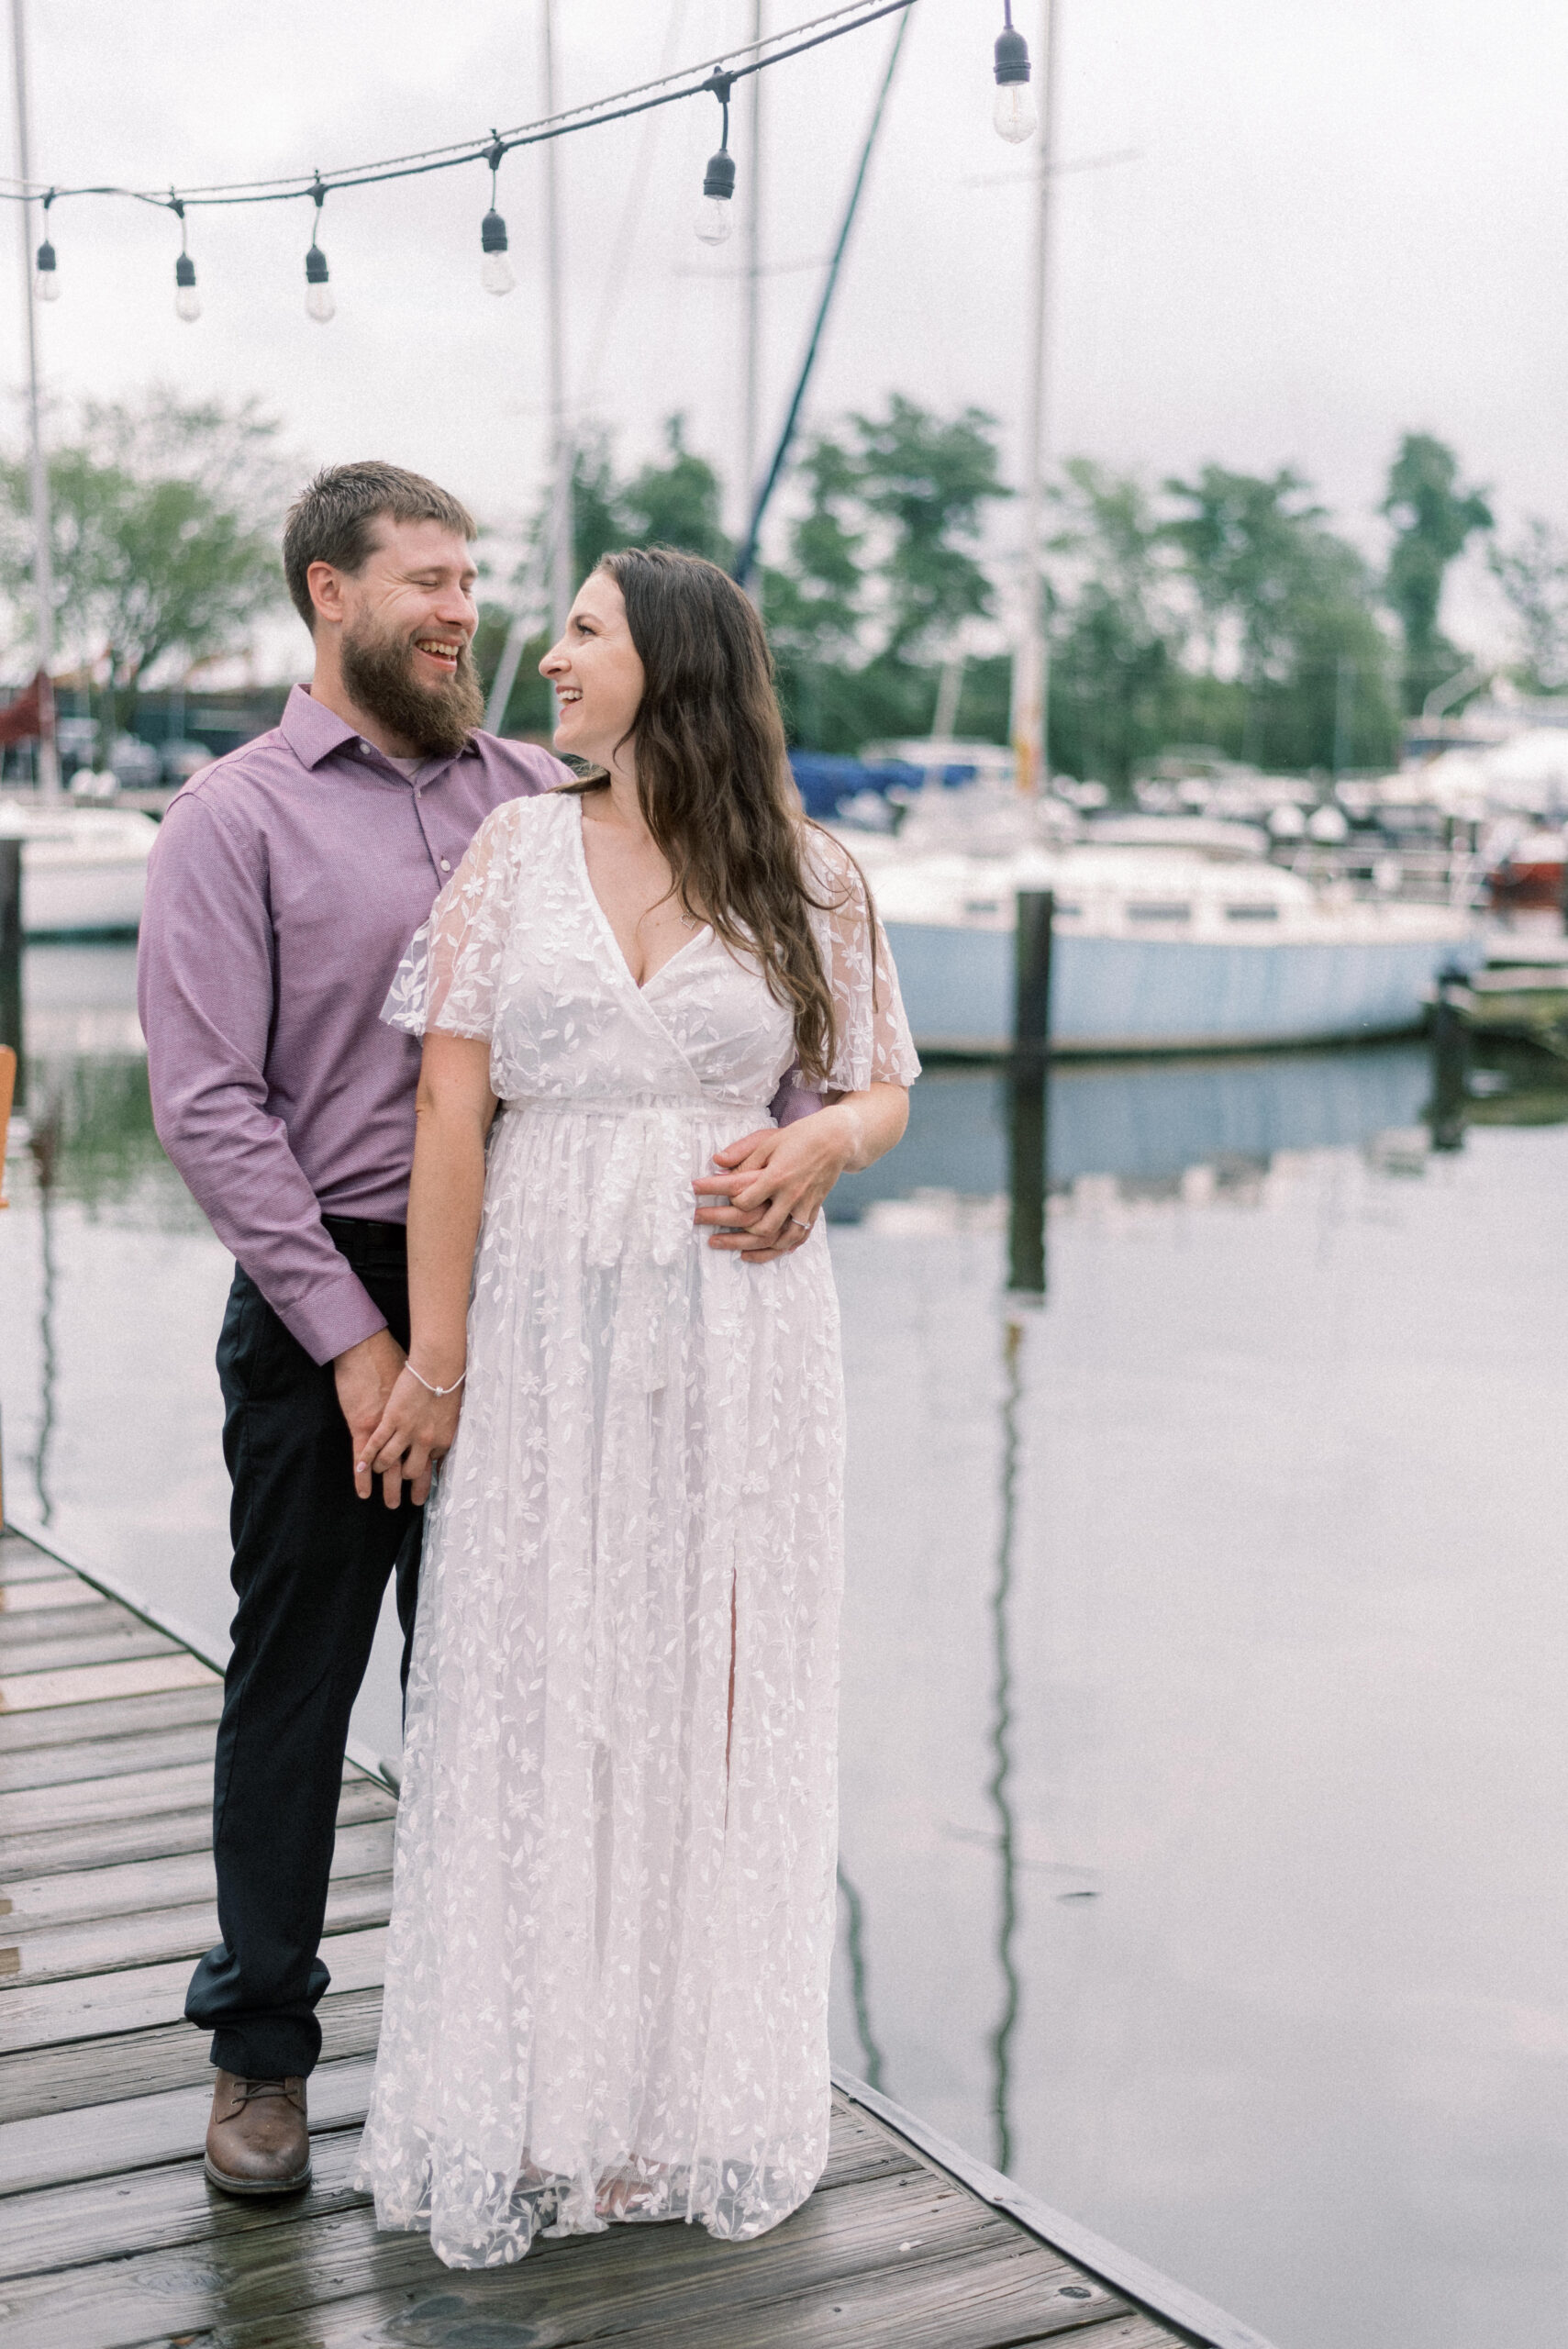 Pennsylvania wedding photographer captures couple smiling at dock